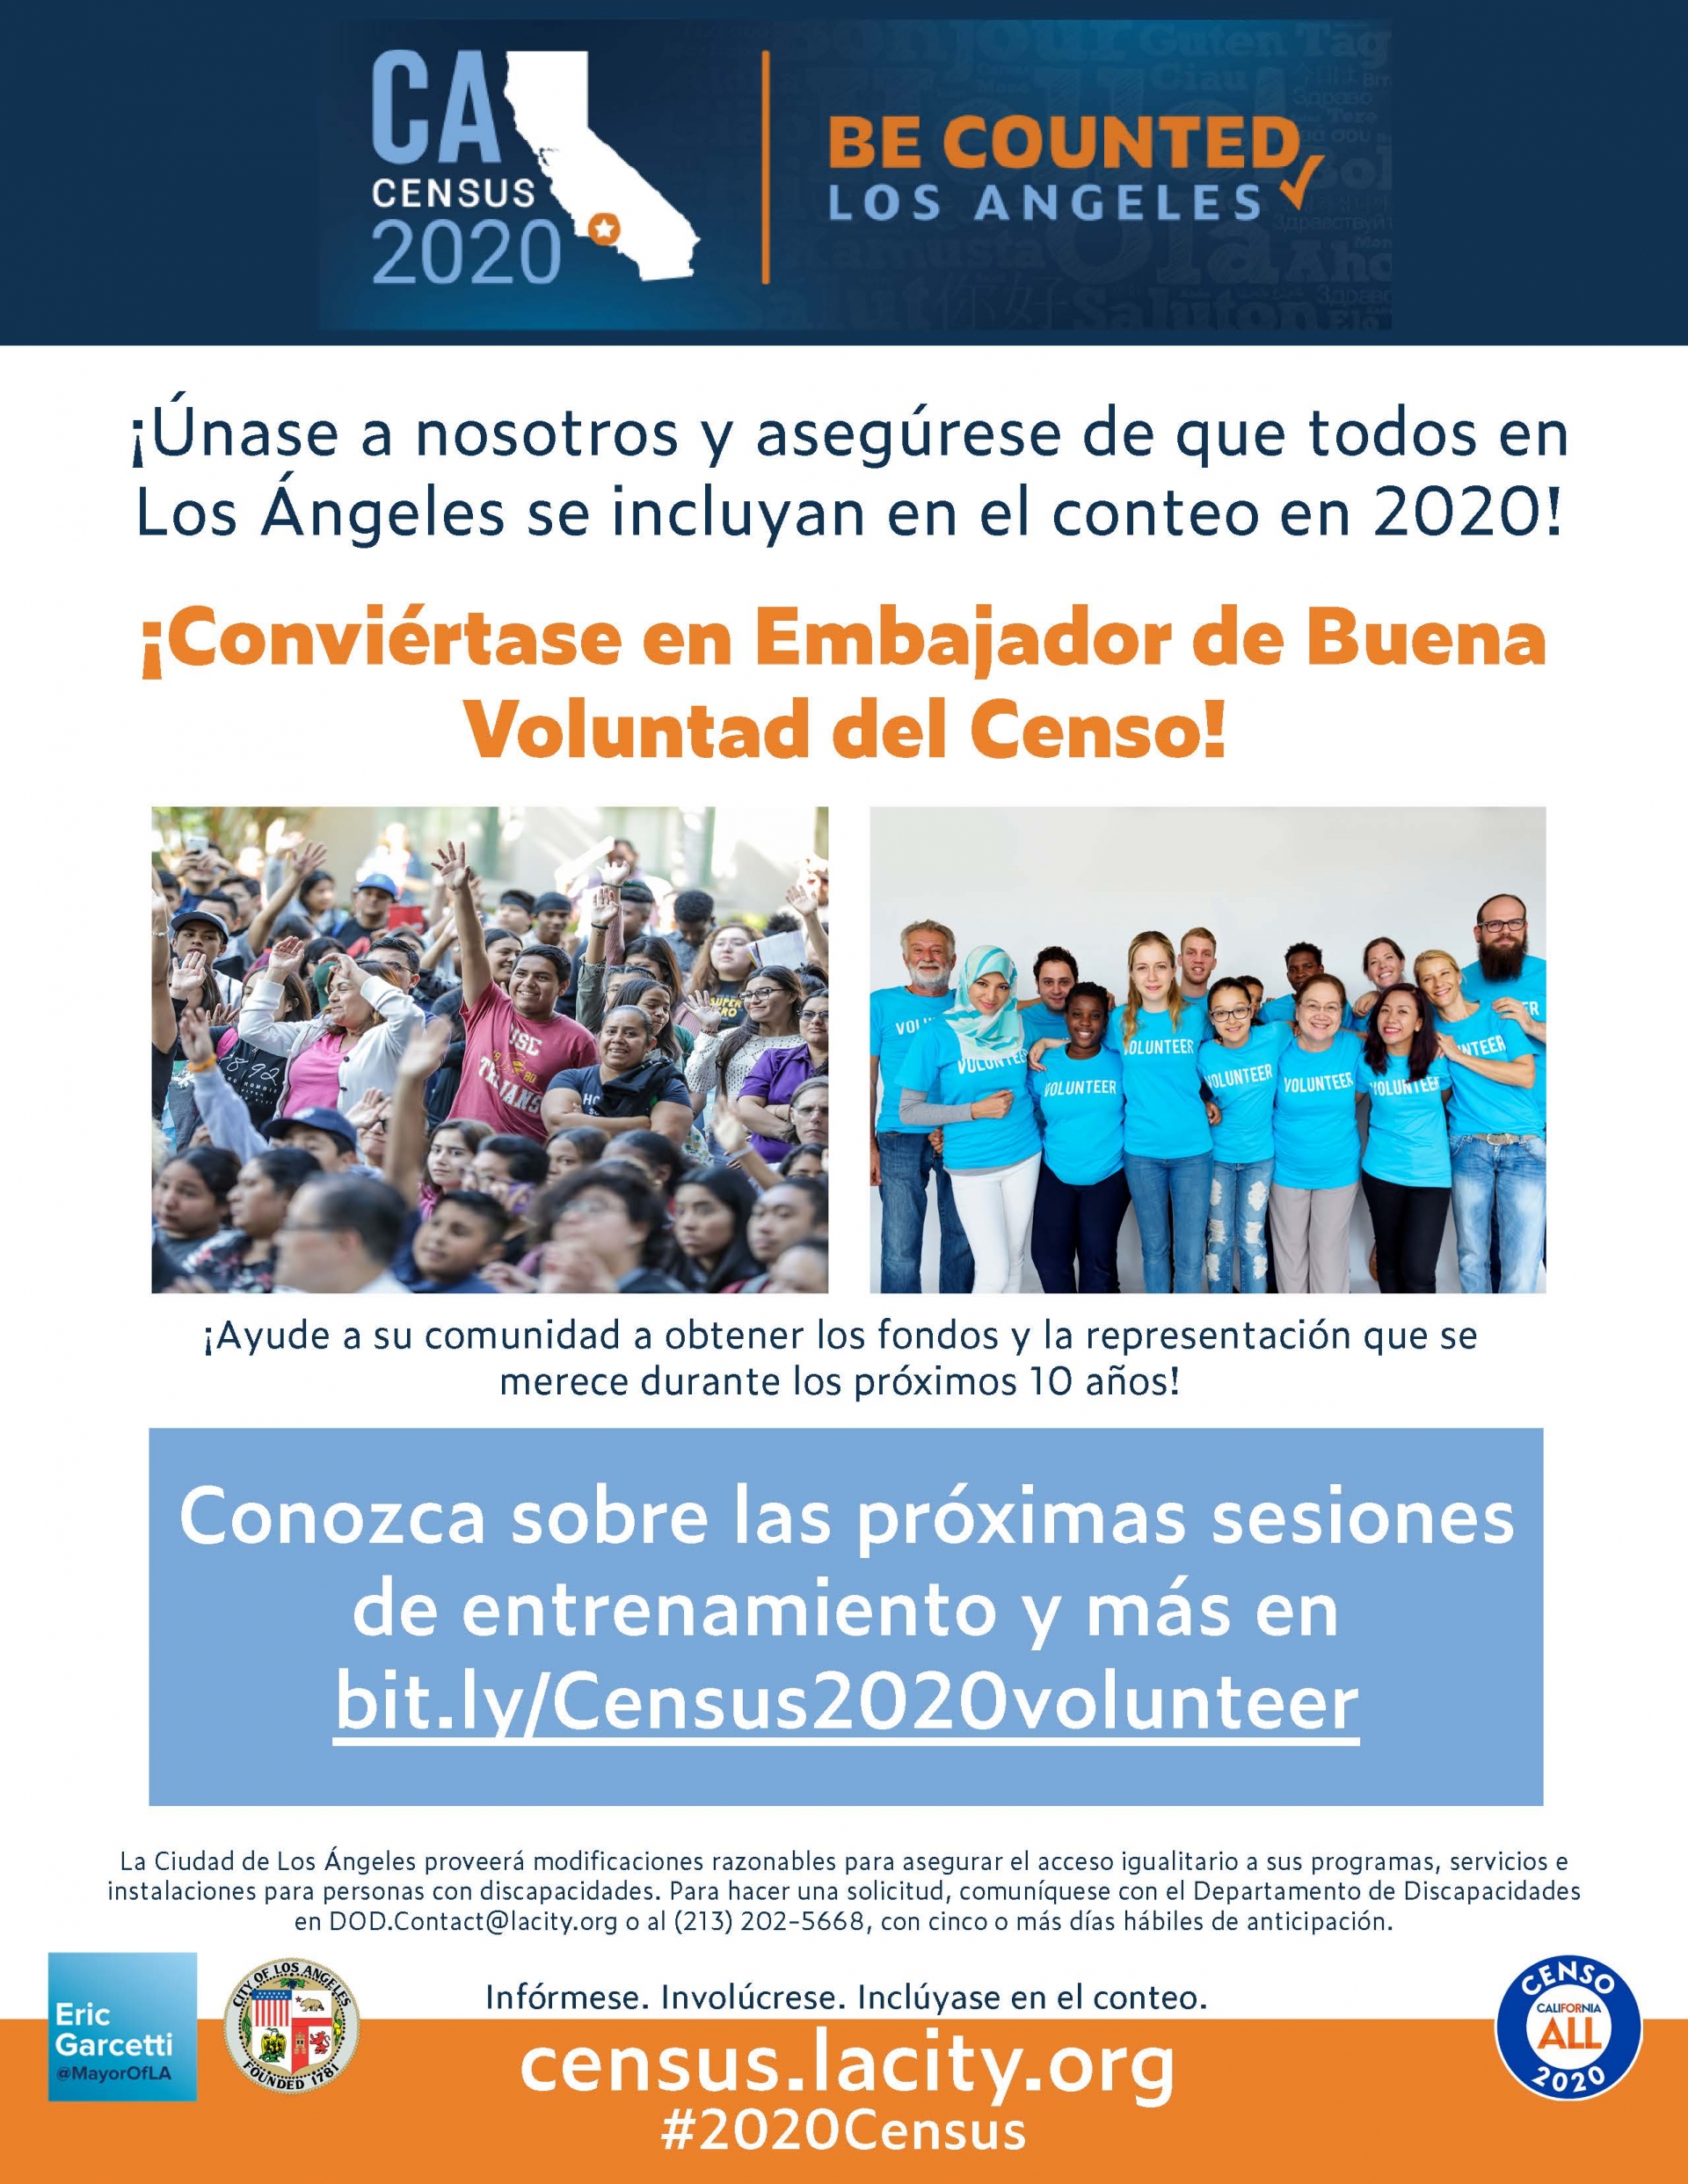 El programa de Embajadores de Buena Voluntad del Censo (Census Goodwill Ambassador - CGA)